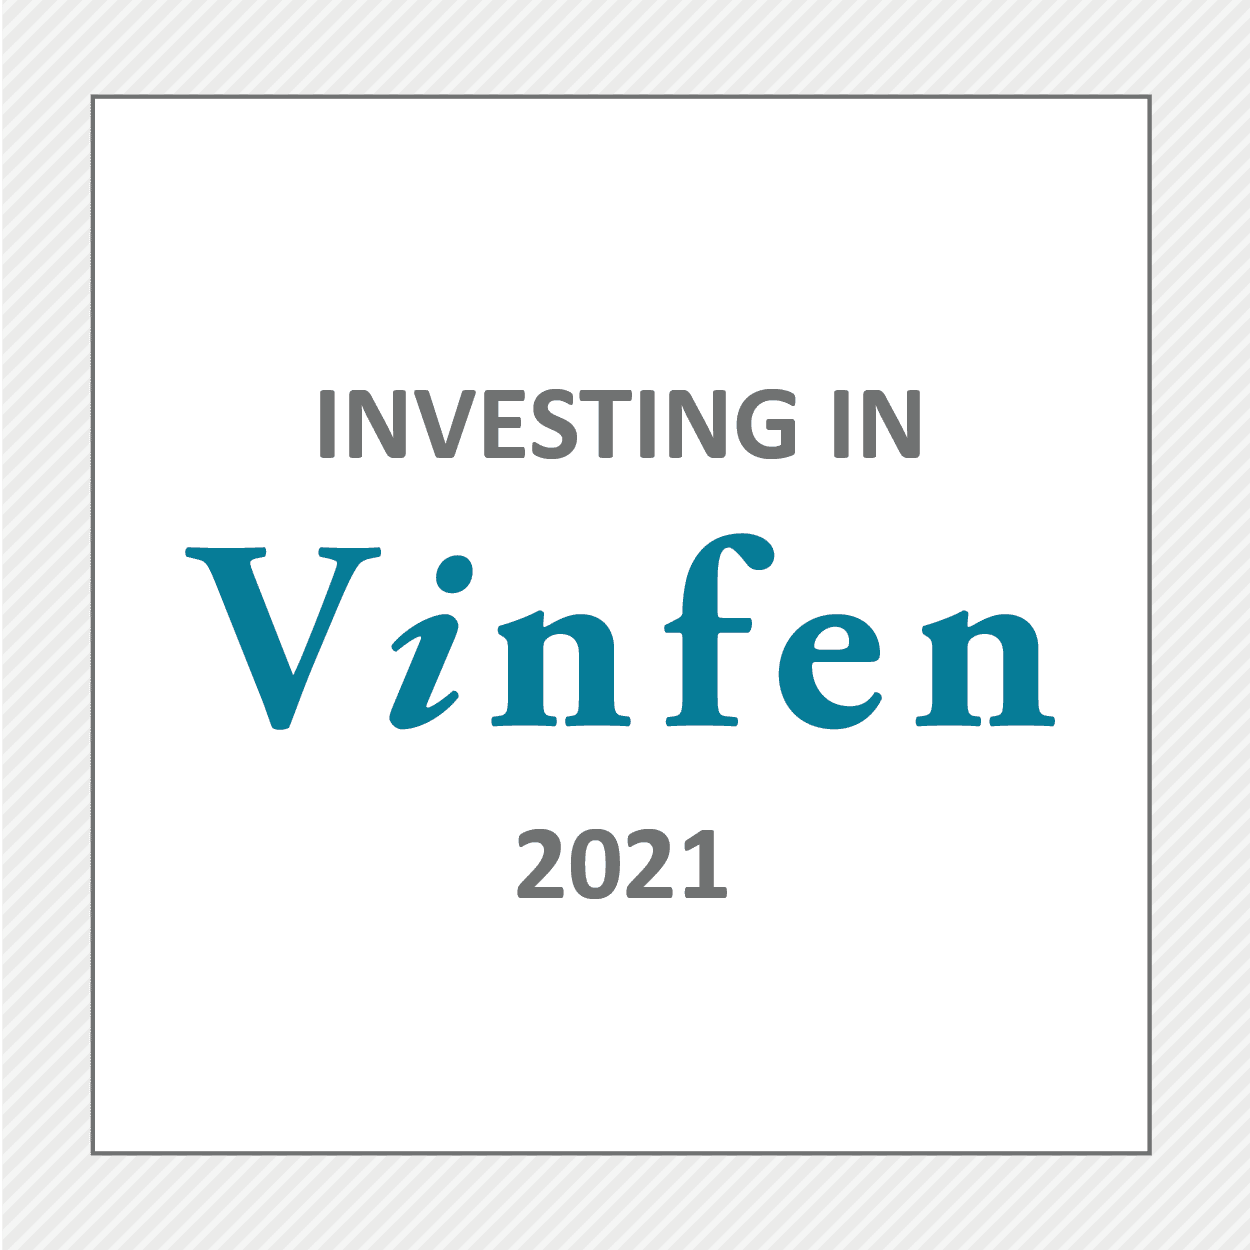 Vinfen Blog 2 3 22 Investing In Vinfen Featured Image 01